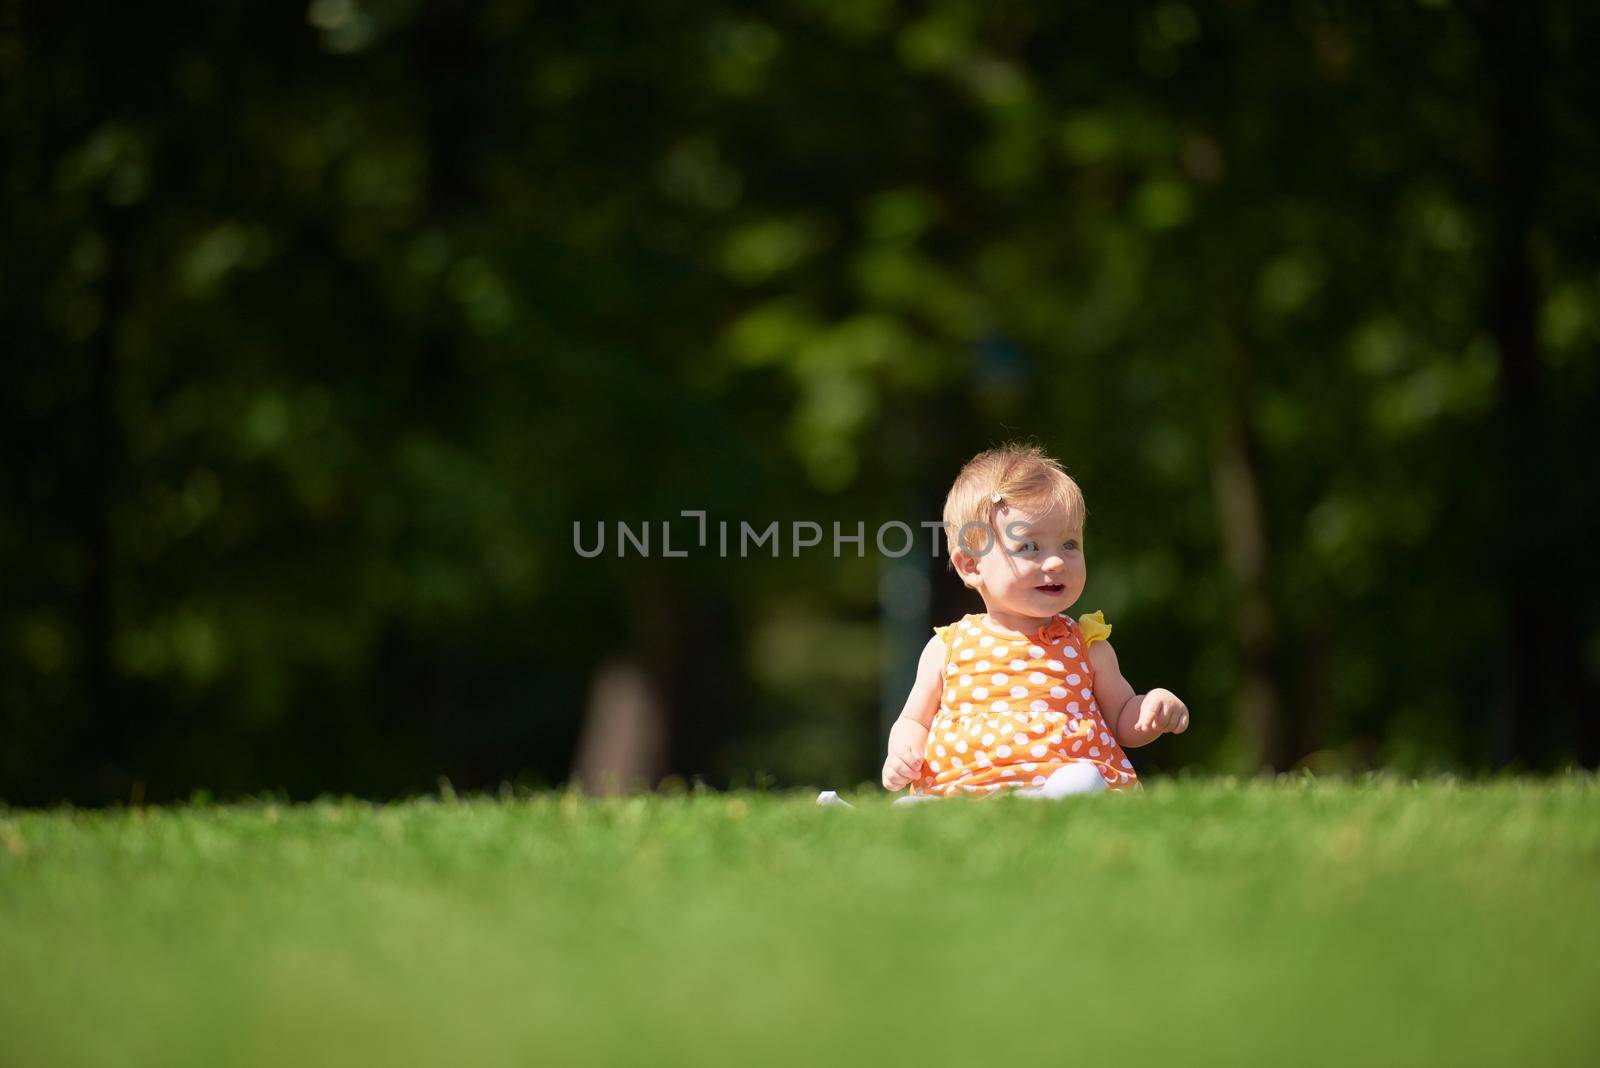 baby in park by dotshock